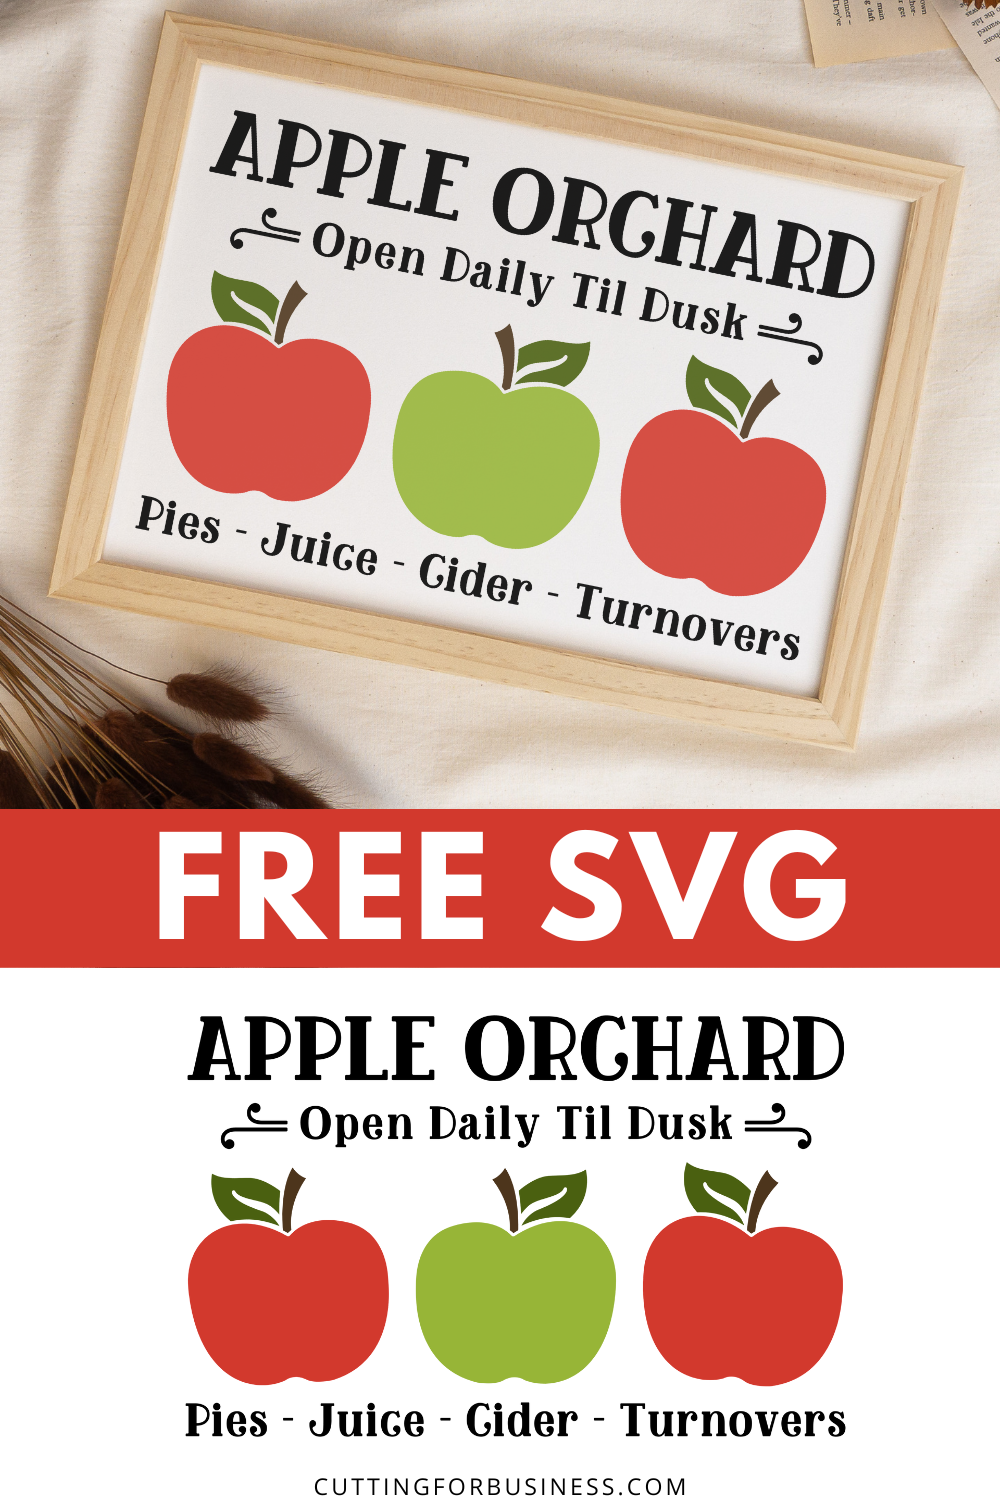 Free Apple Orchard SVG Cut File - cuttingforbusiness.com.